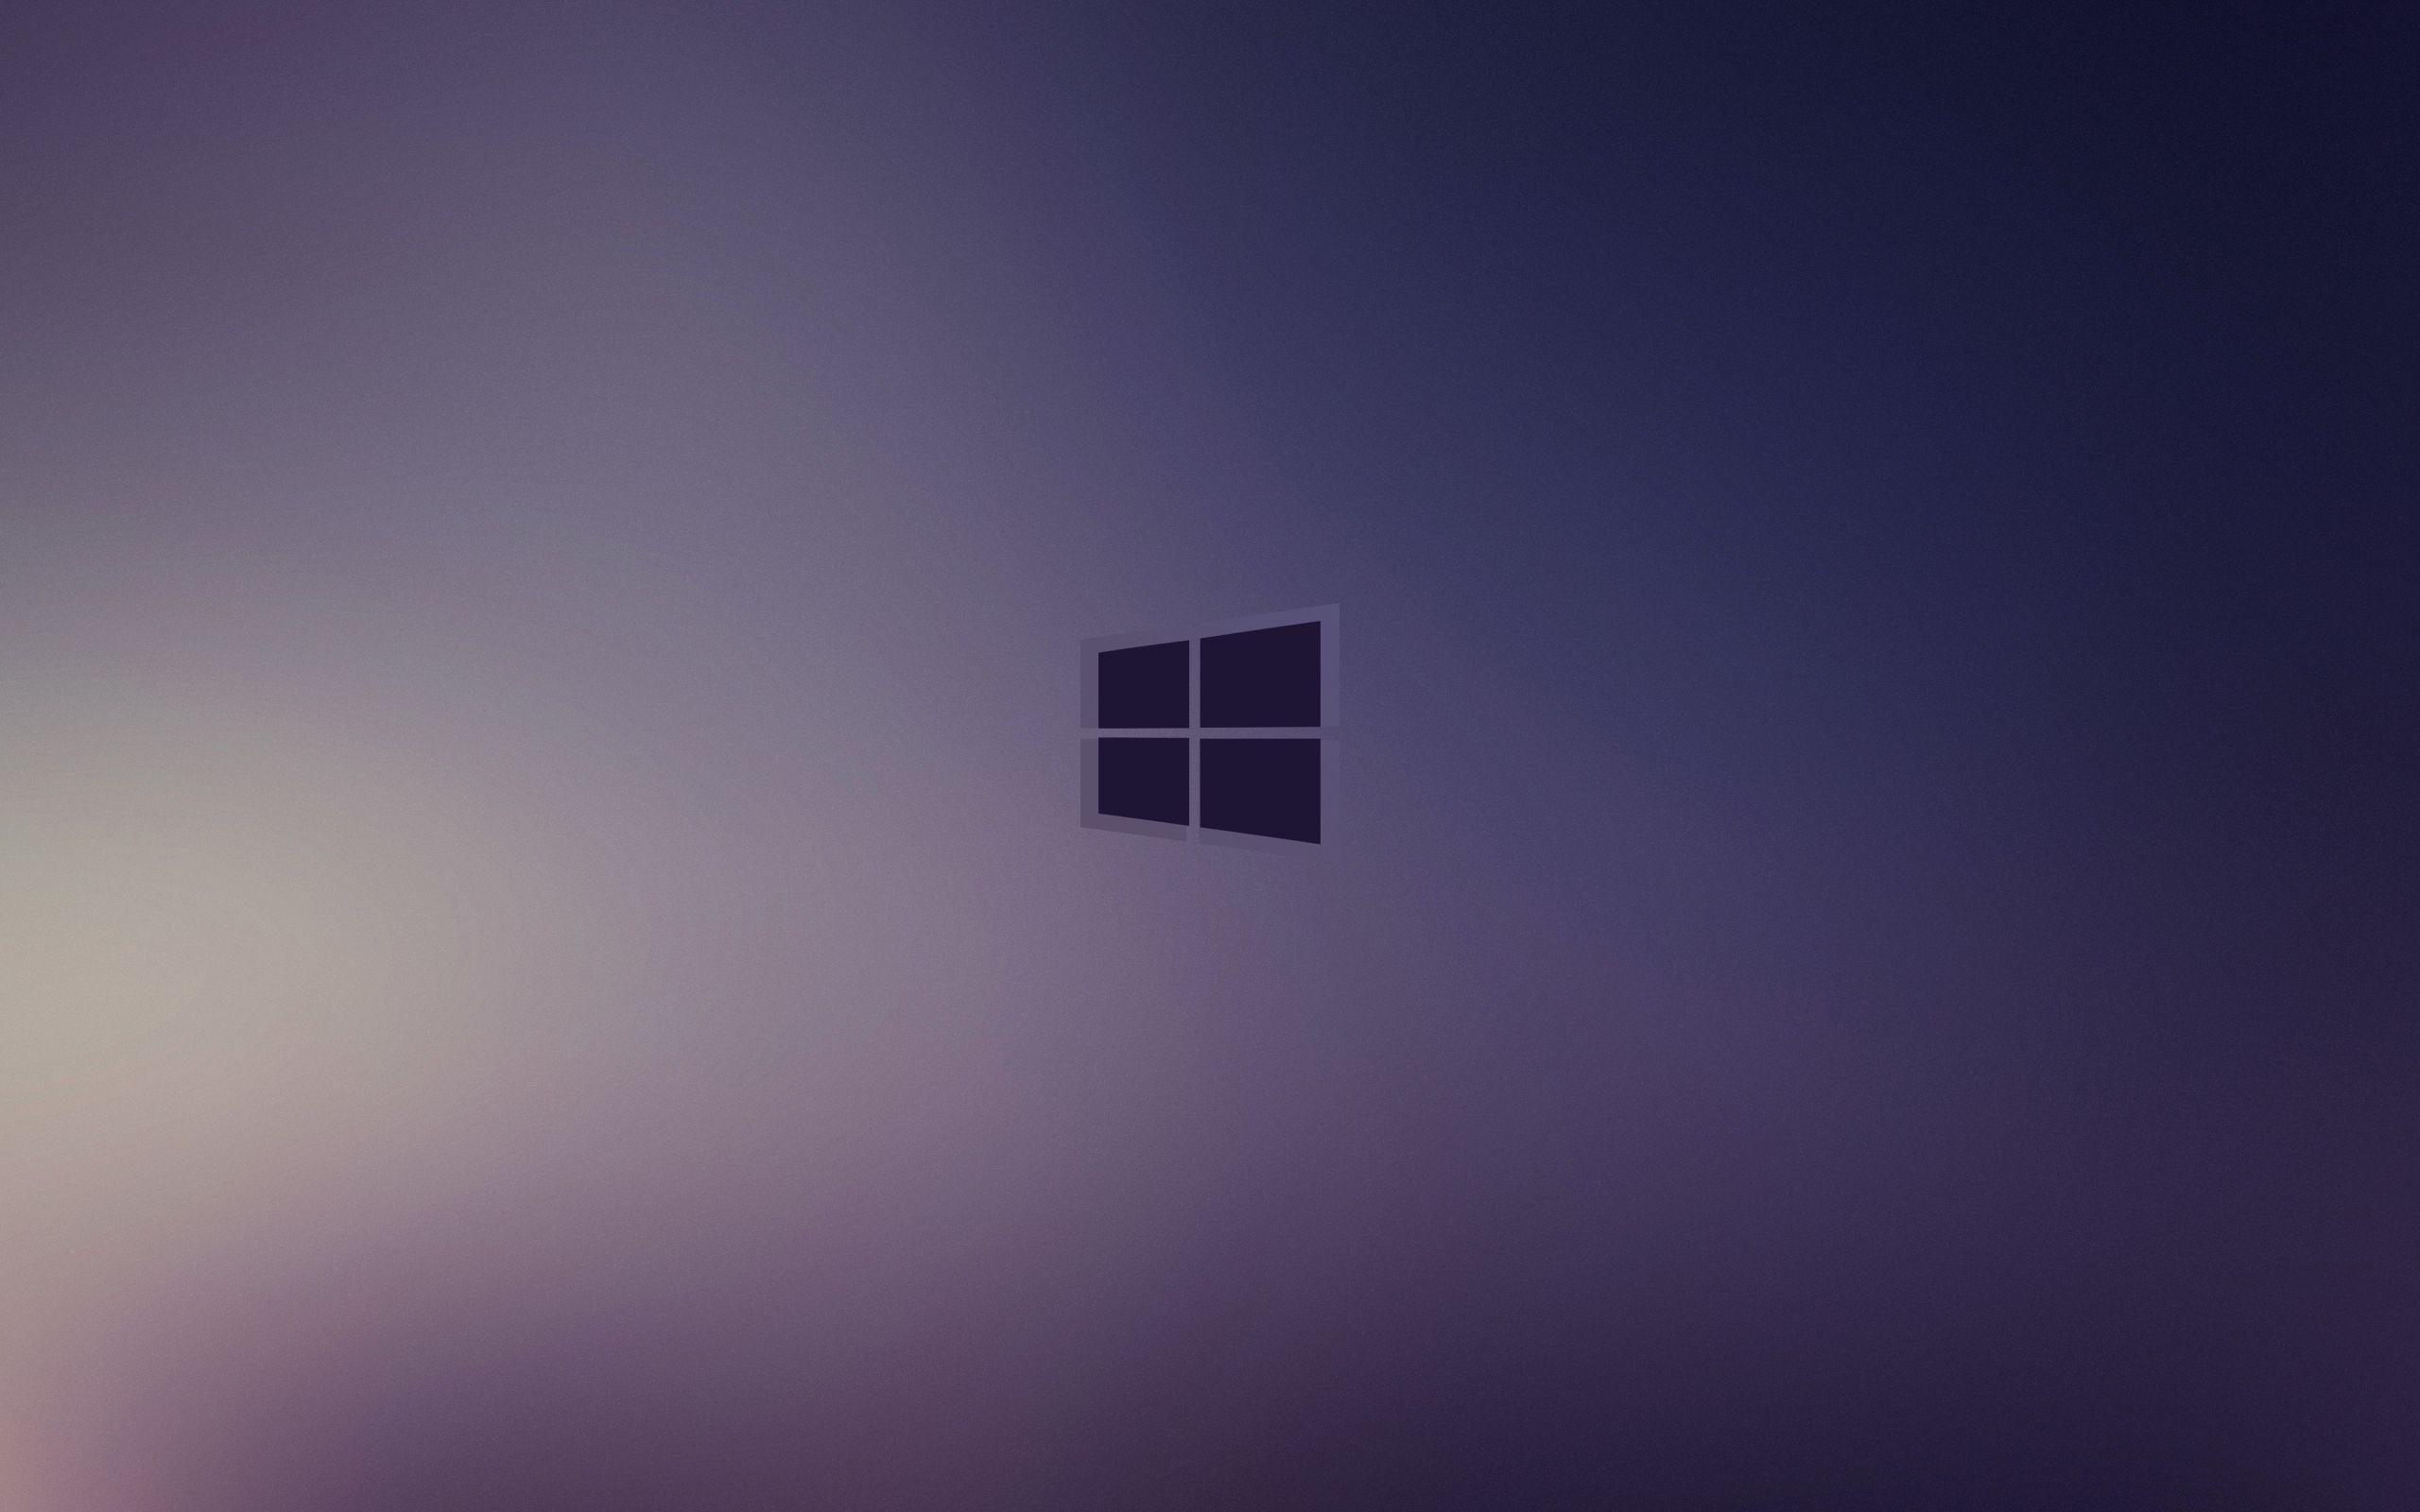 HD Wallpaper for Windows 10